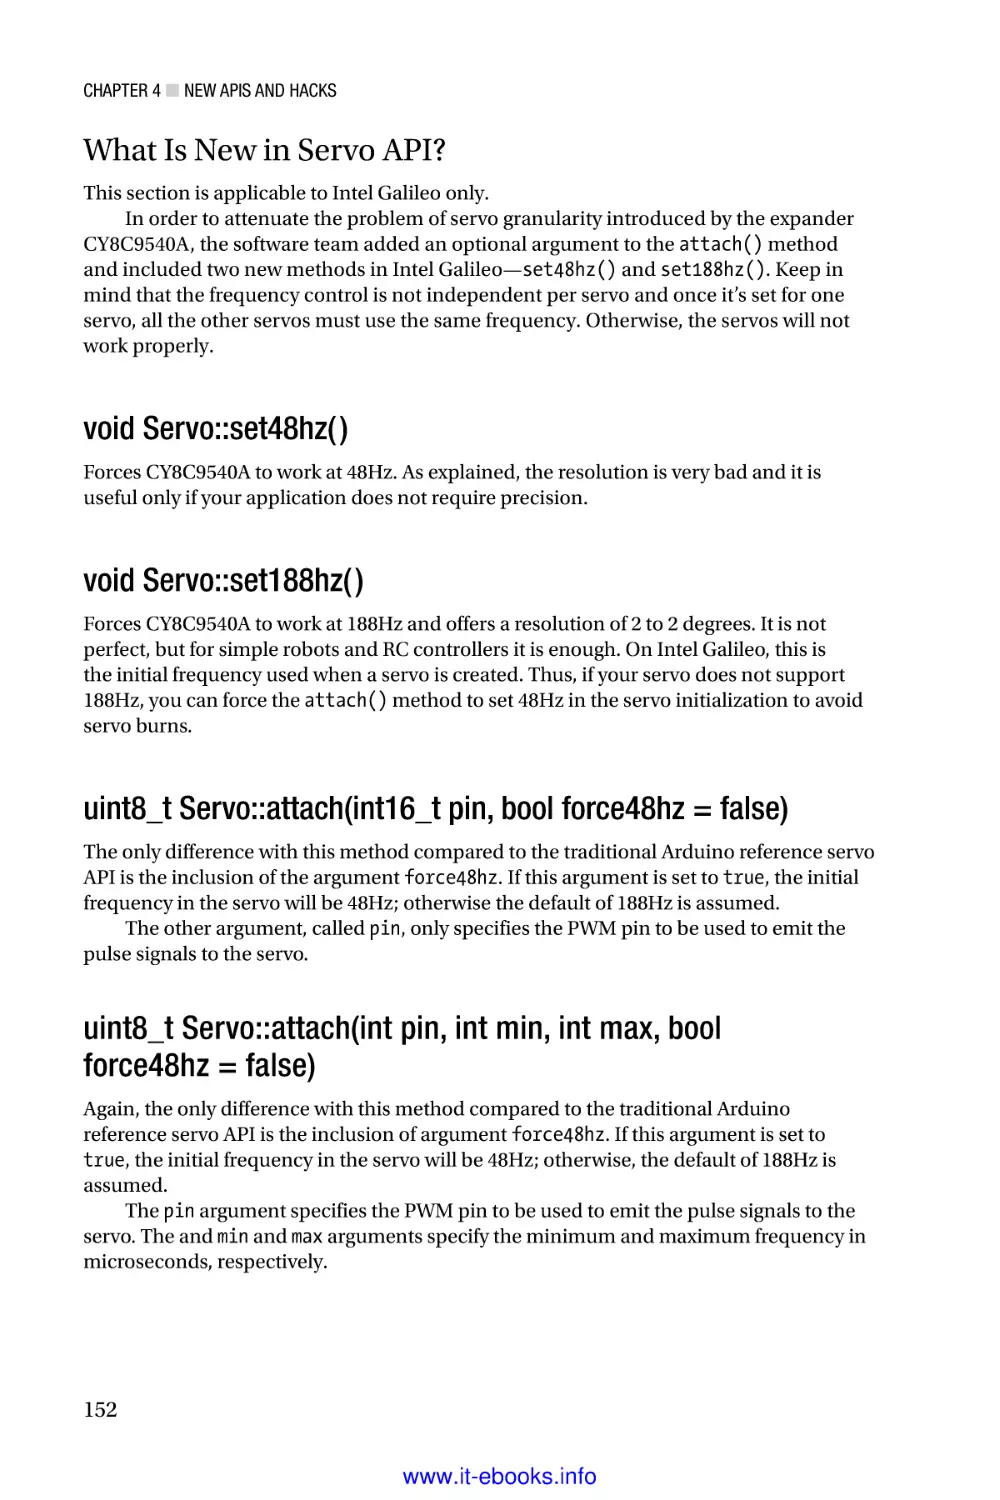 What Is New in Servo API?
void Servo
void Servo
uint8_t Servo
uint8_t Servo